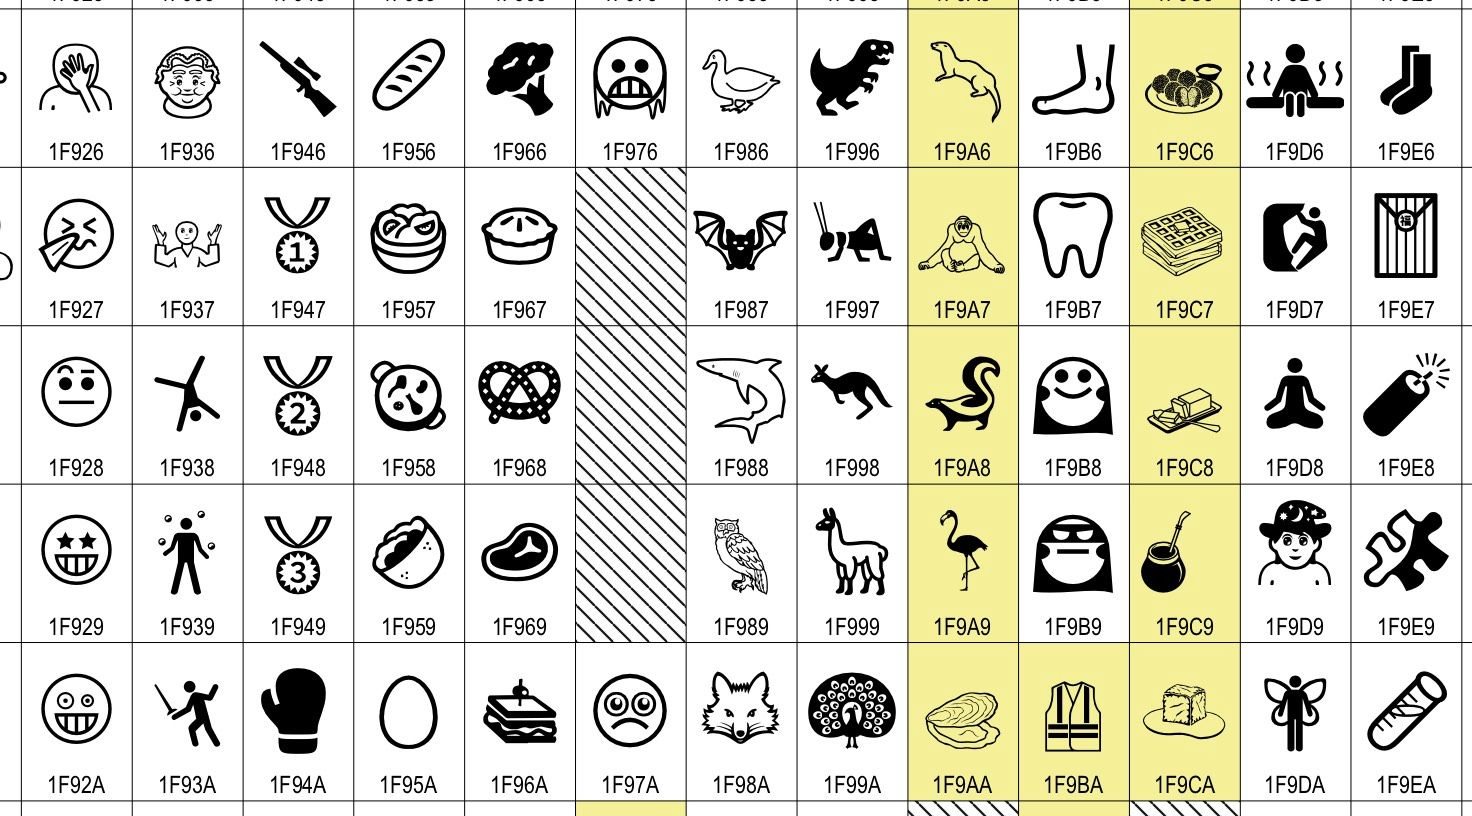 Unicode symbols pictures